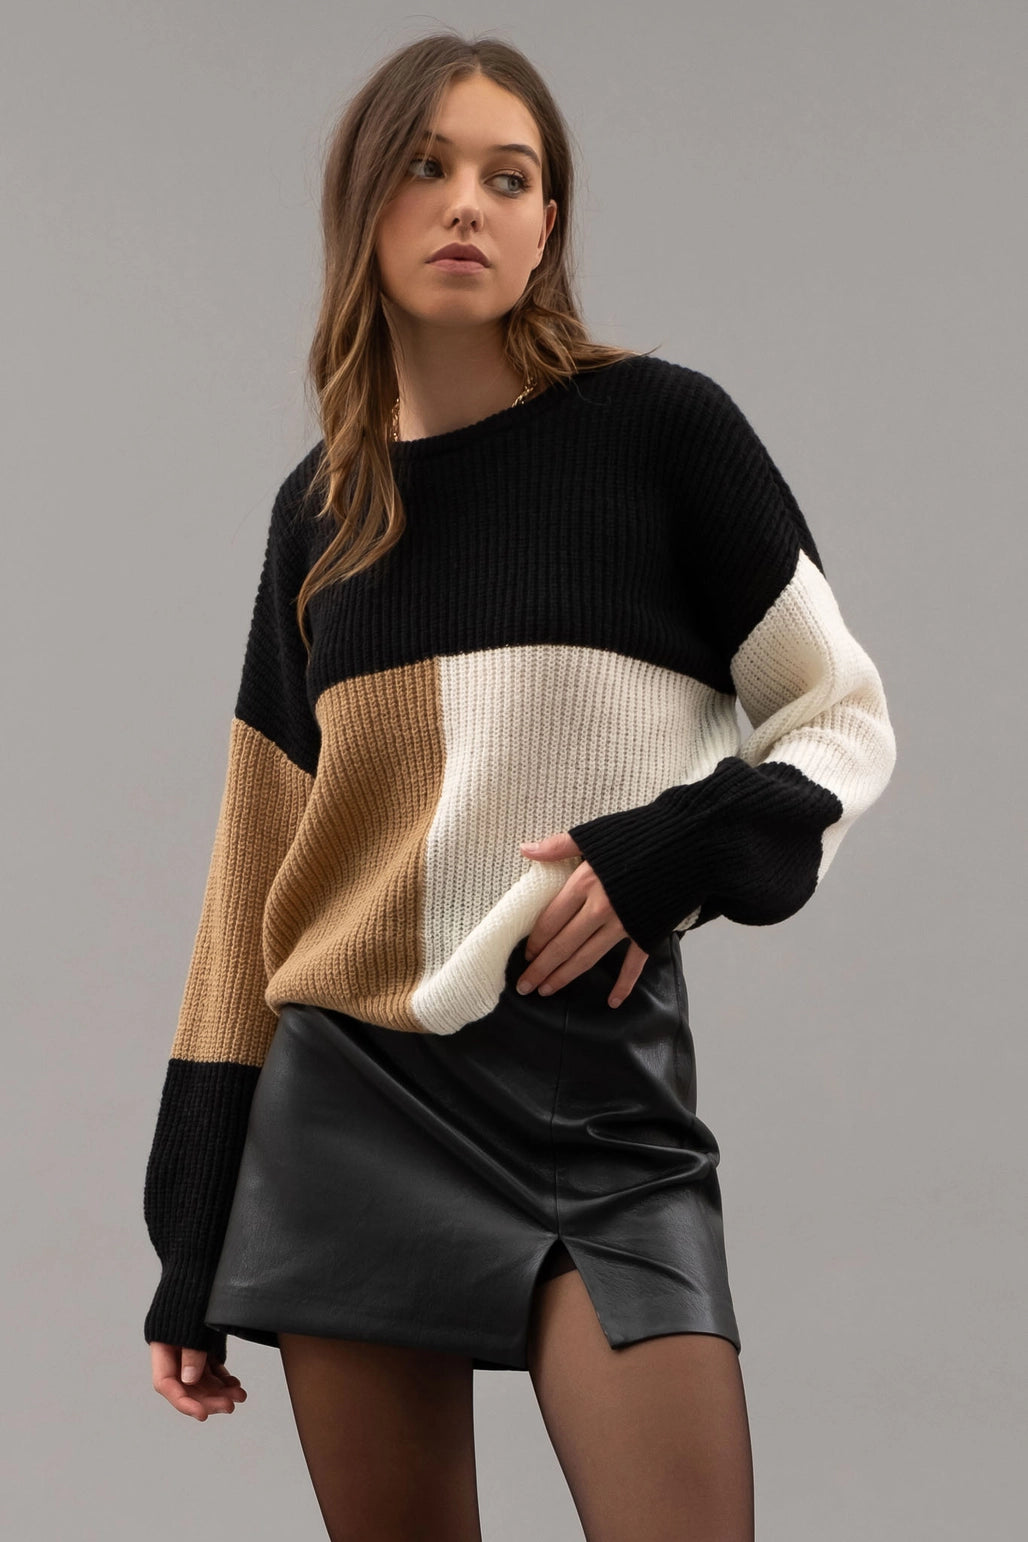 Charlotte Knit Sweater in Black